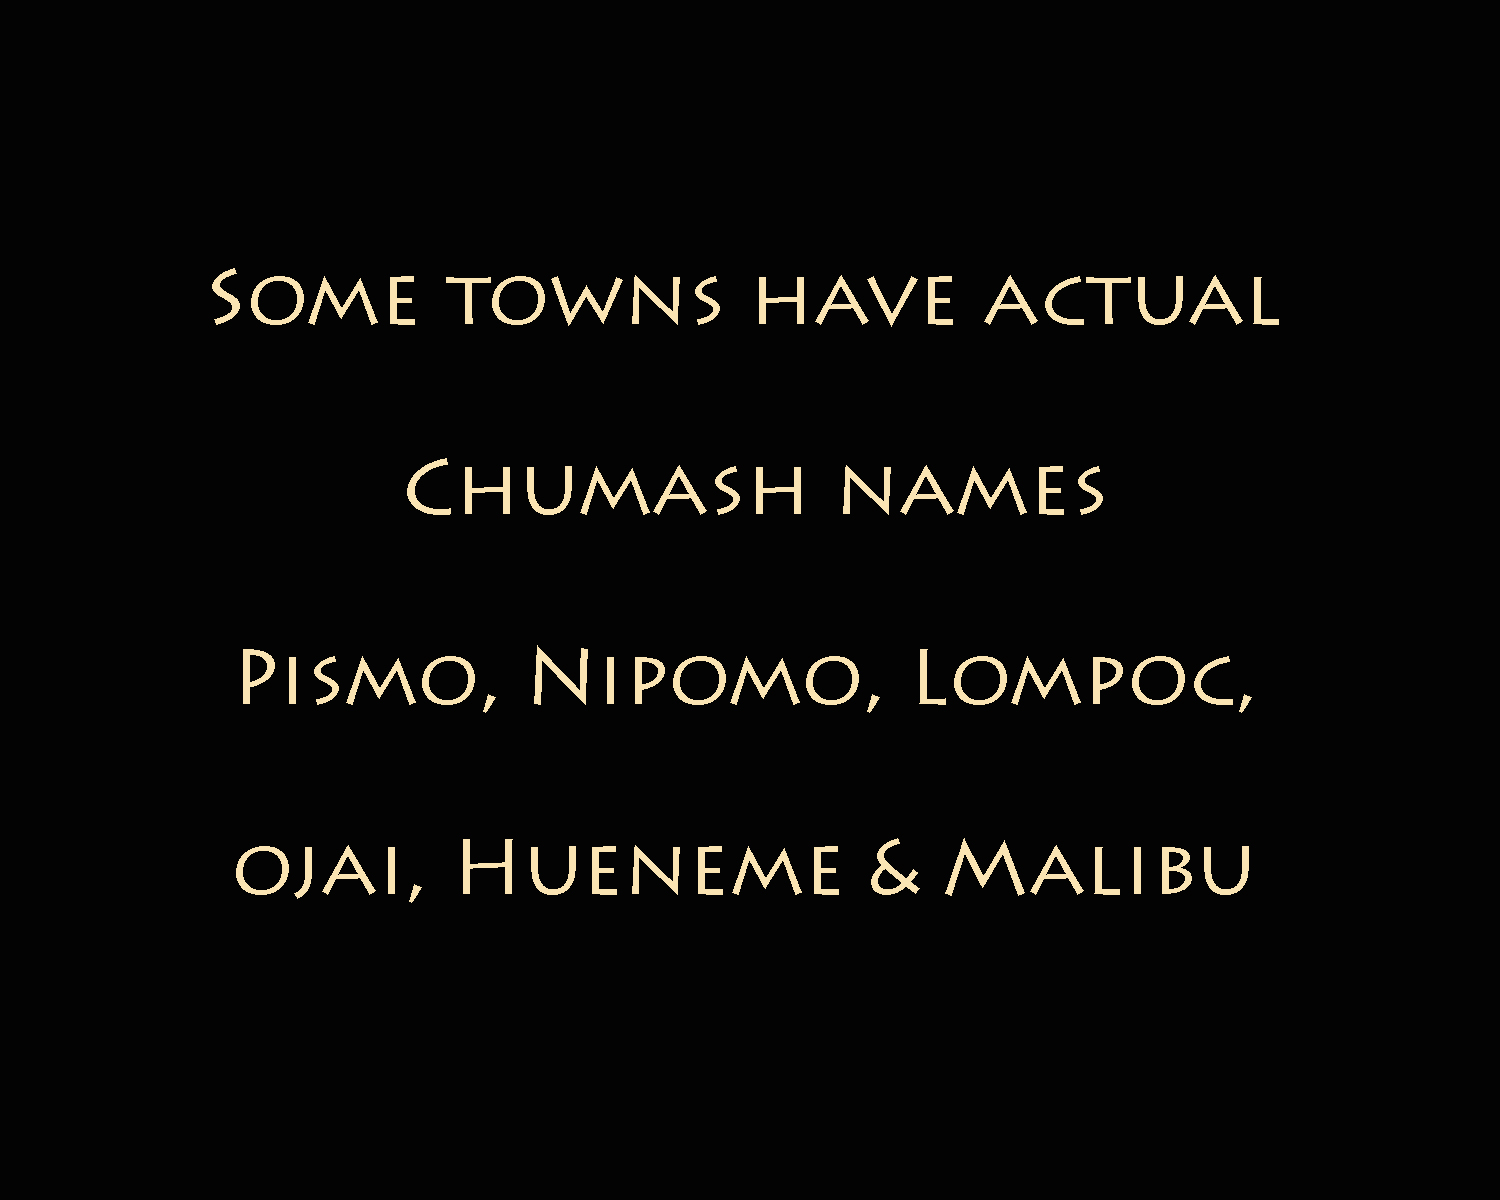 Chumash names